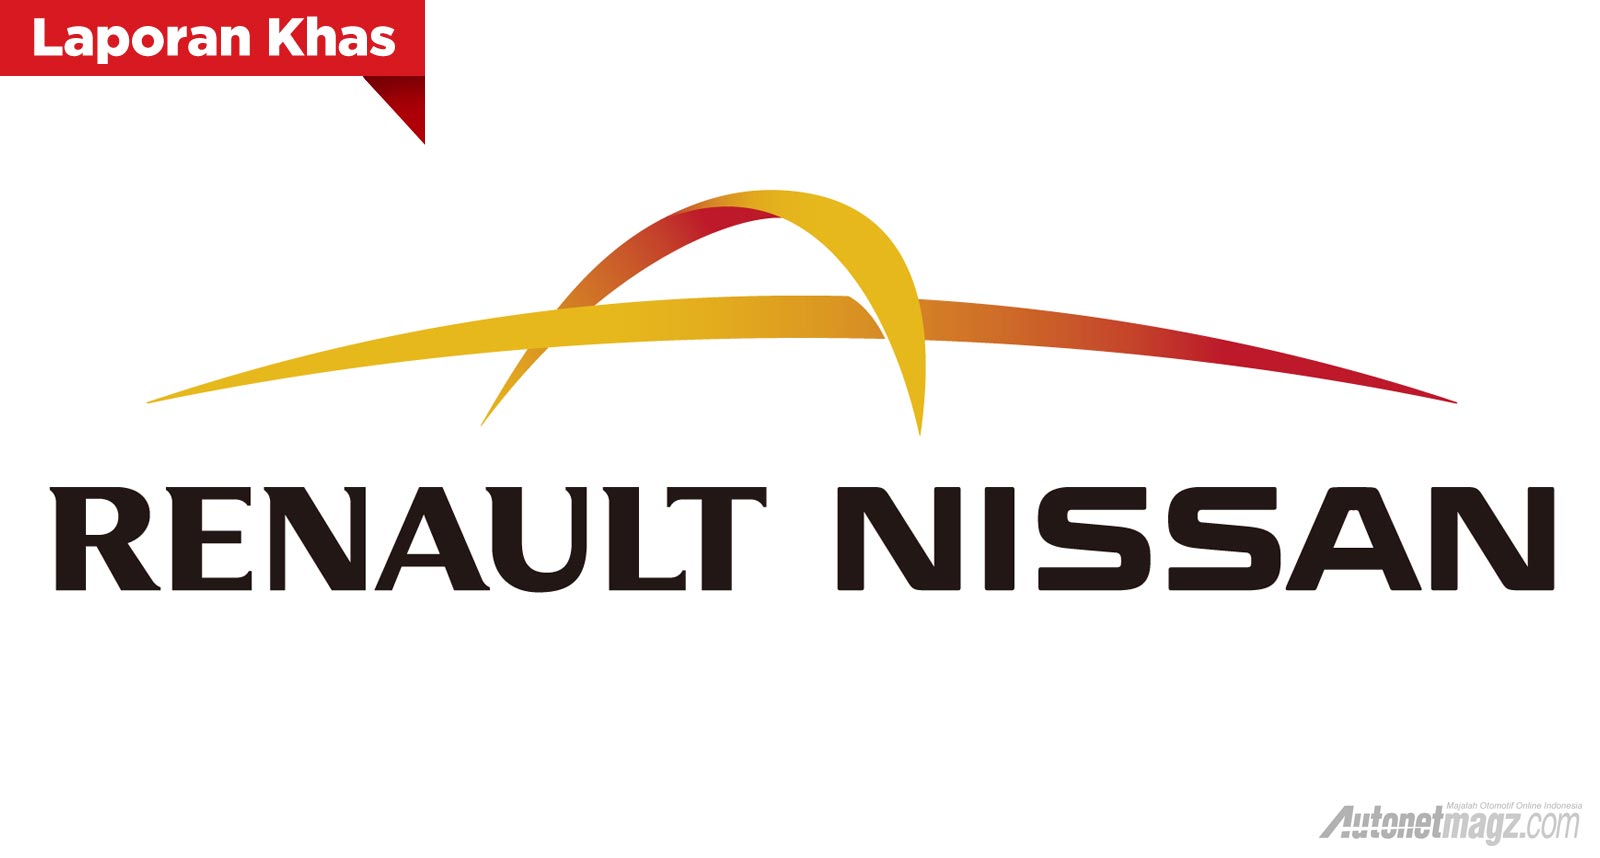 Renault nissan logo vector